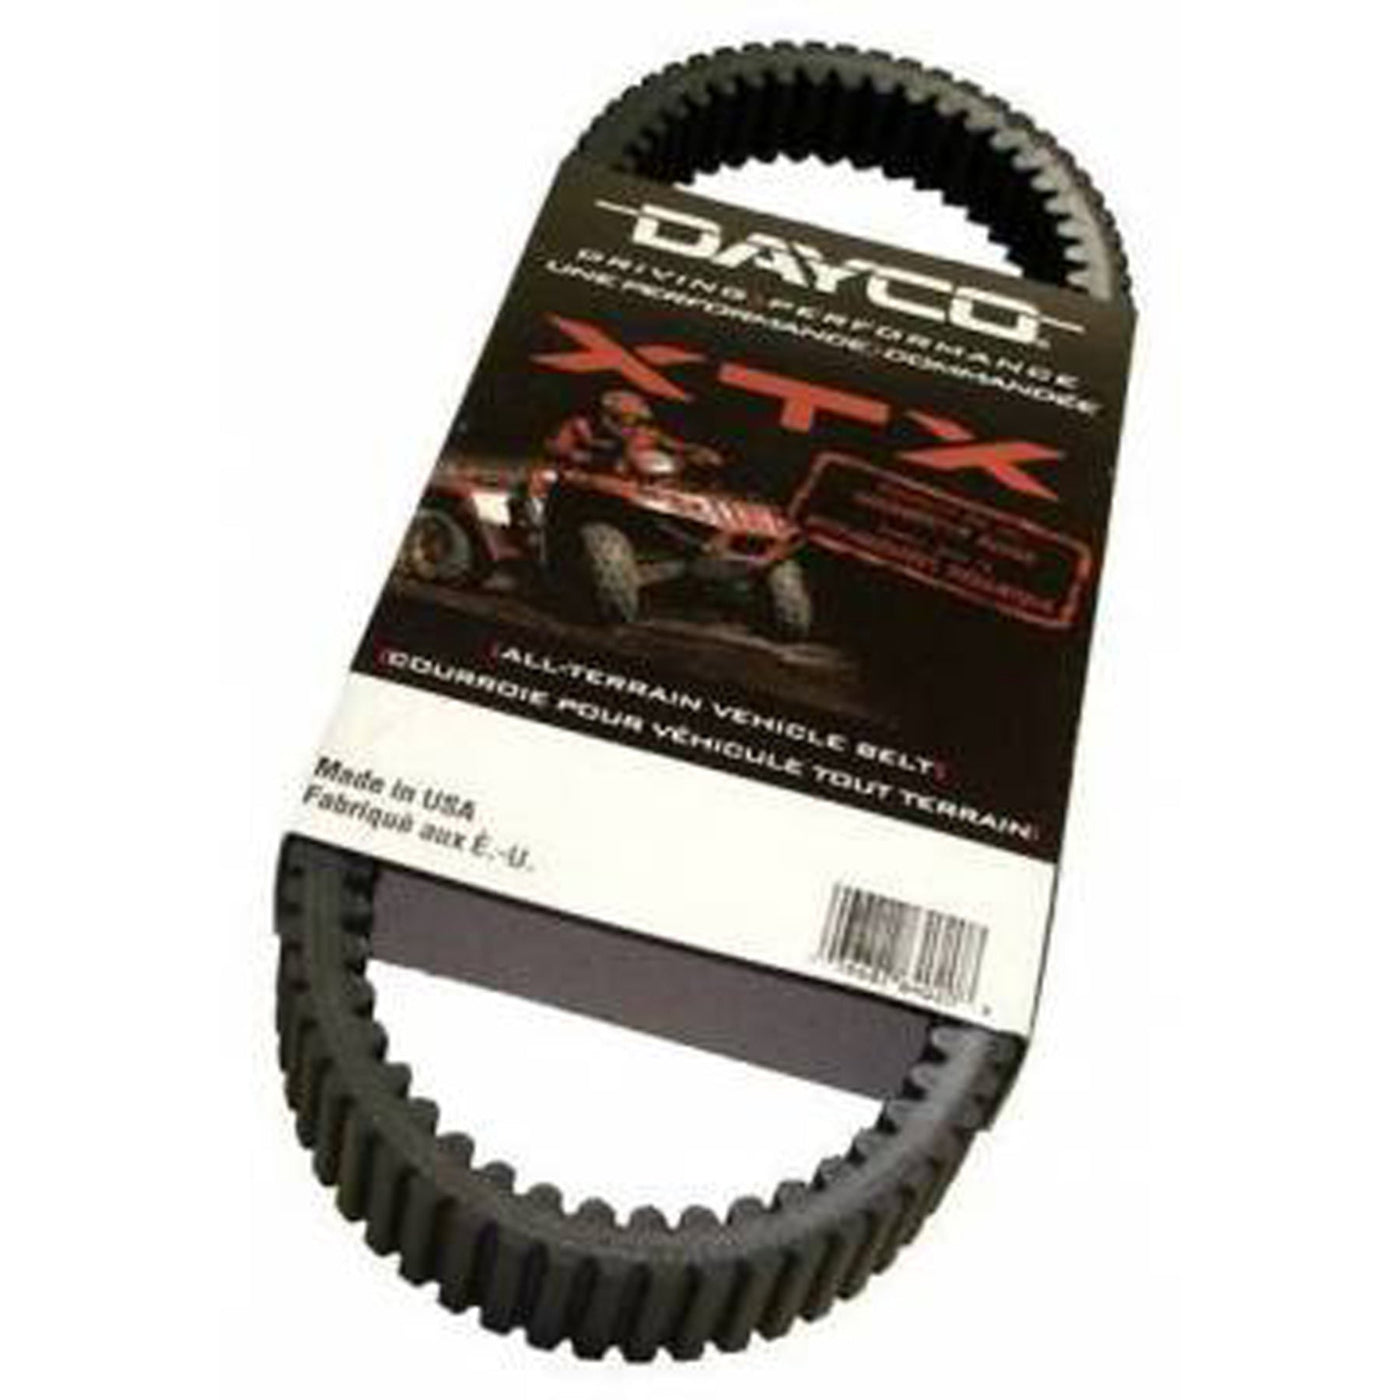 Dayco XTX2266 XTX Series Drive Belt #XTX2266